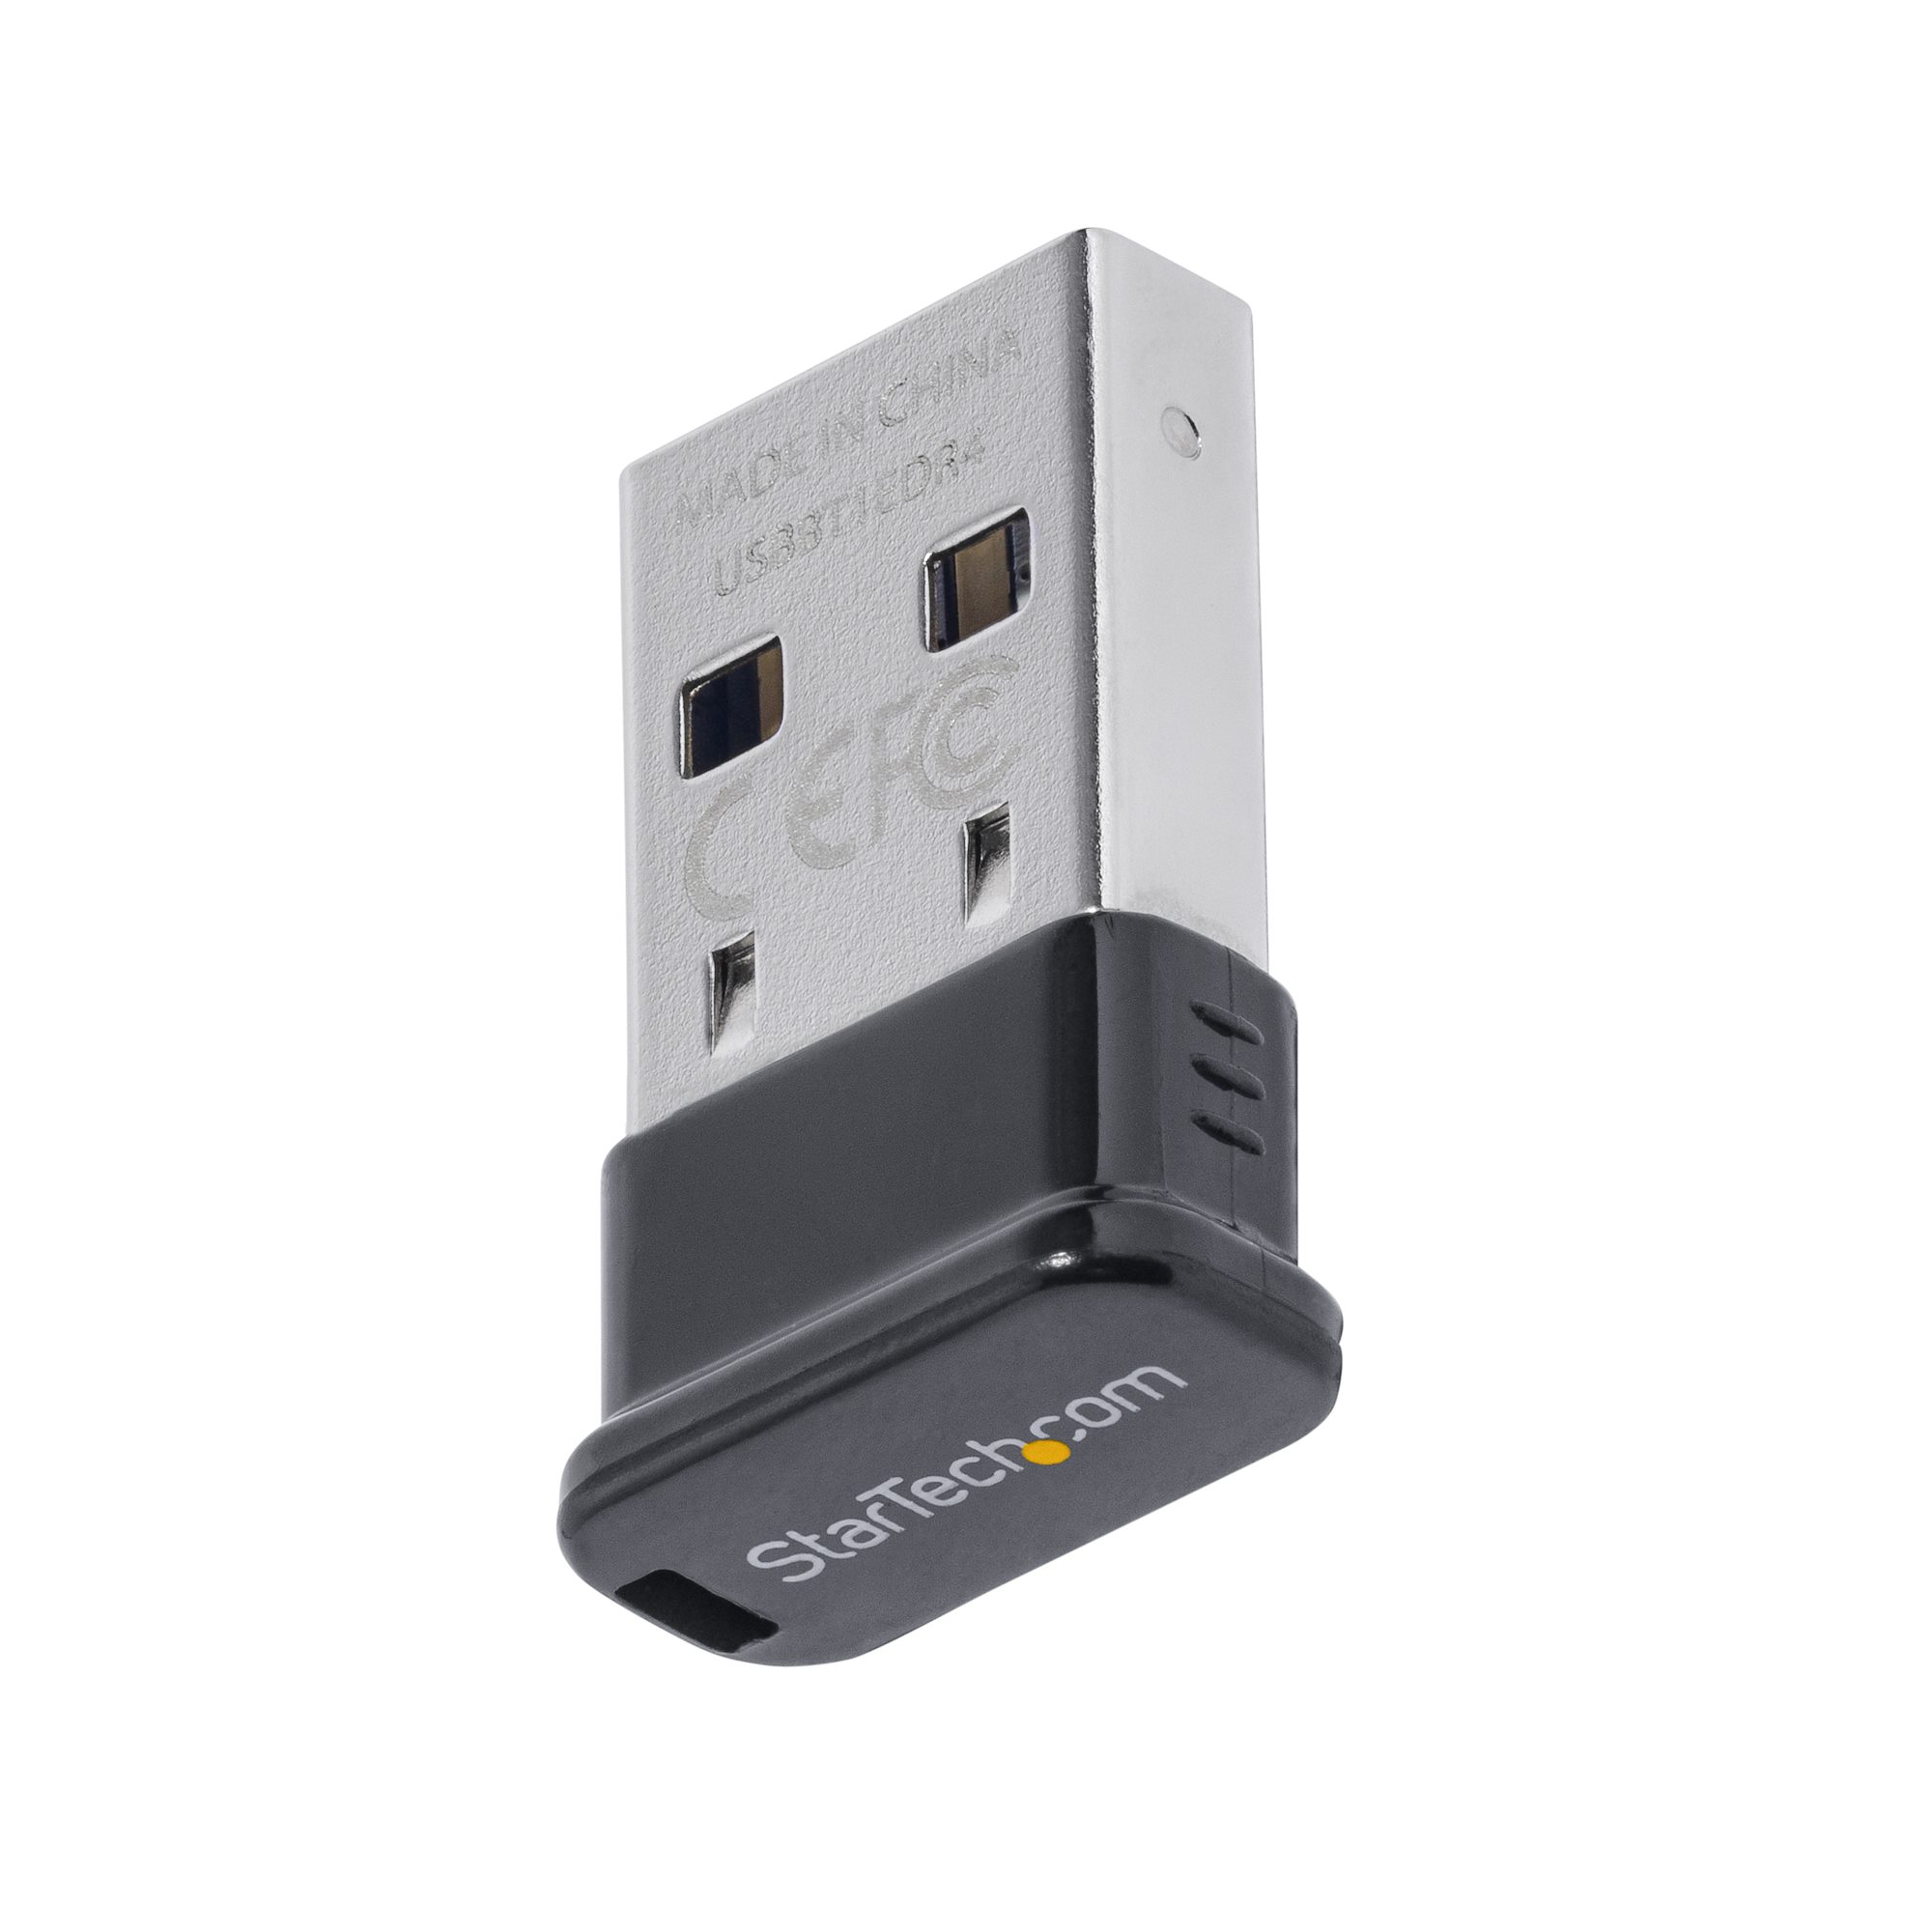 Mini USB Bluetooth 2.1 Adapter - Class 1 EDR Wireless Network Adapter